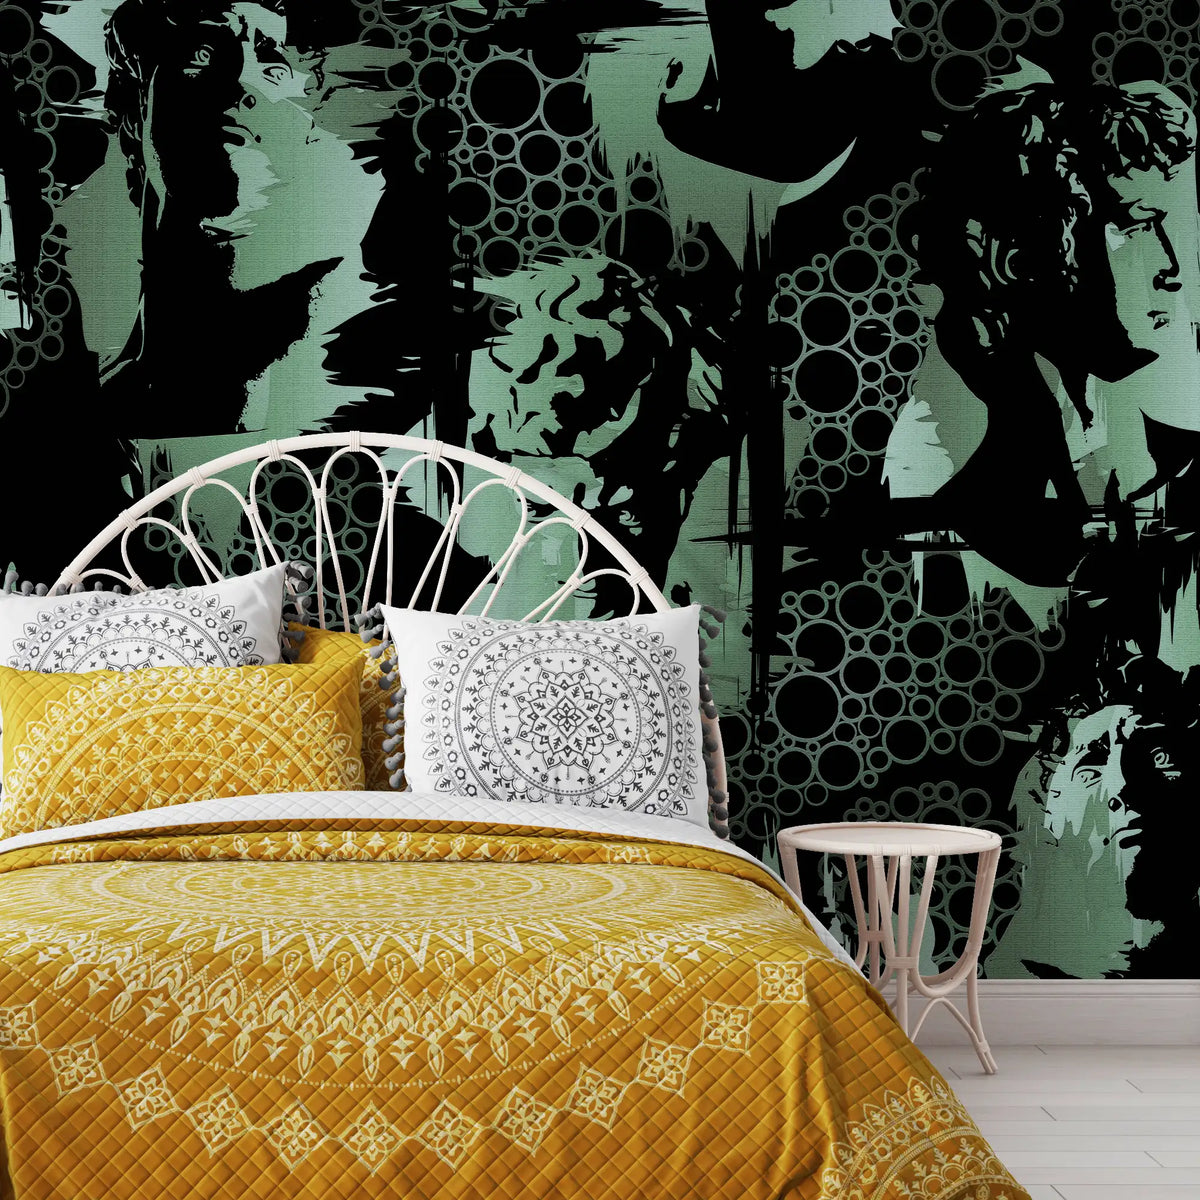 3136-C / Modern Camouflage Peelable Wallpaper, Geometric with Hidden Portraits - Ideal for Bedroom, Kitchen, Living Room, Bathroom - Artevella